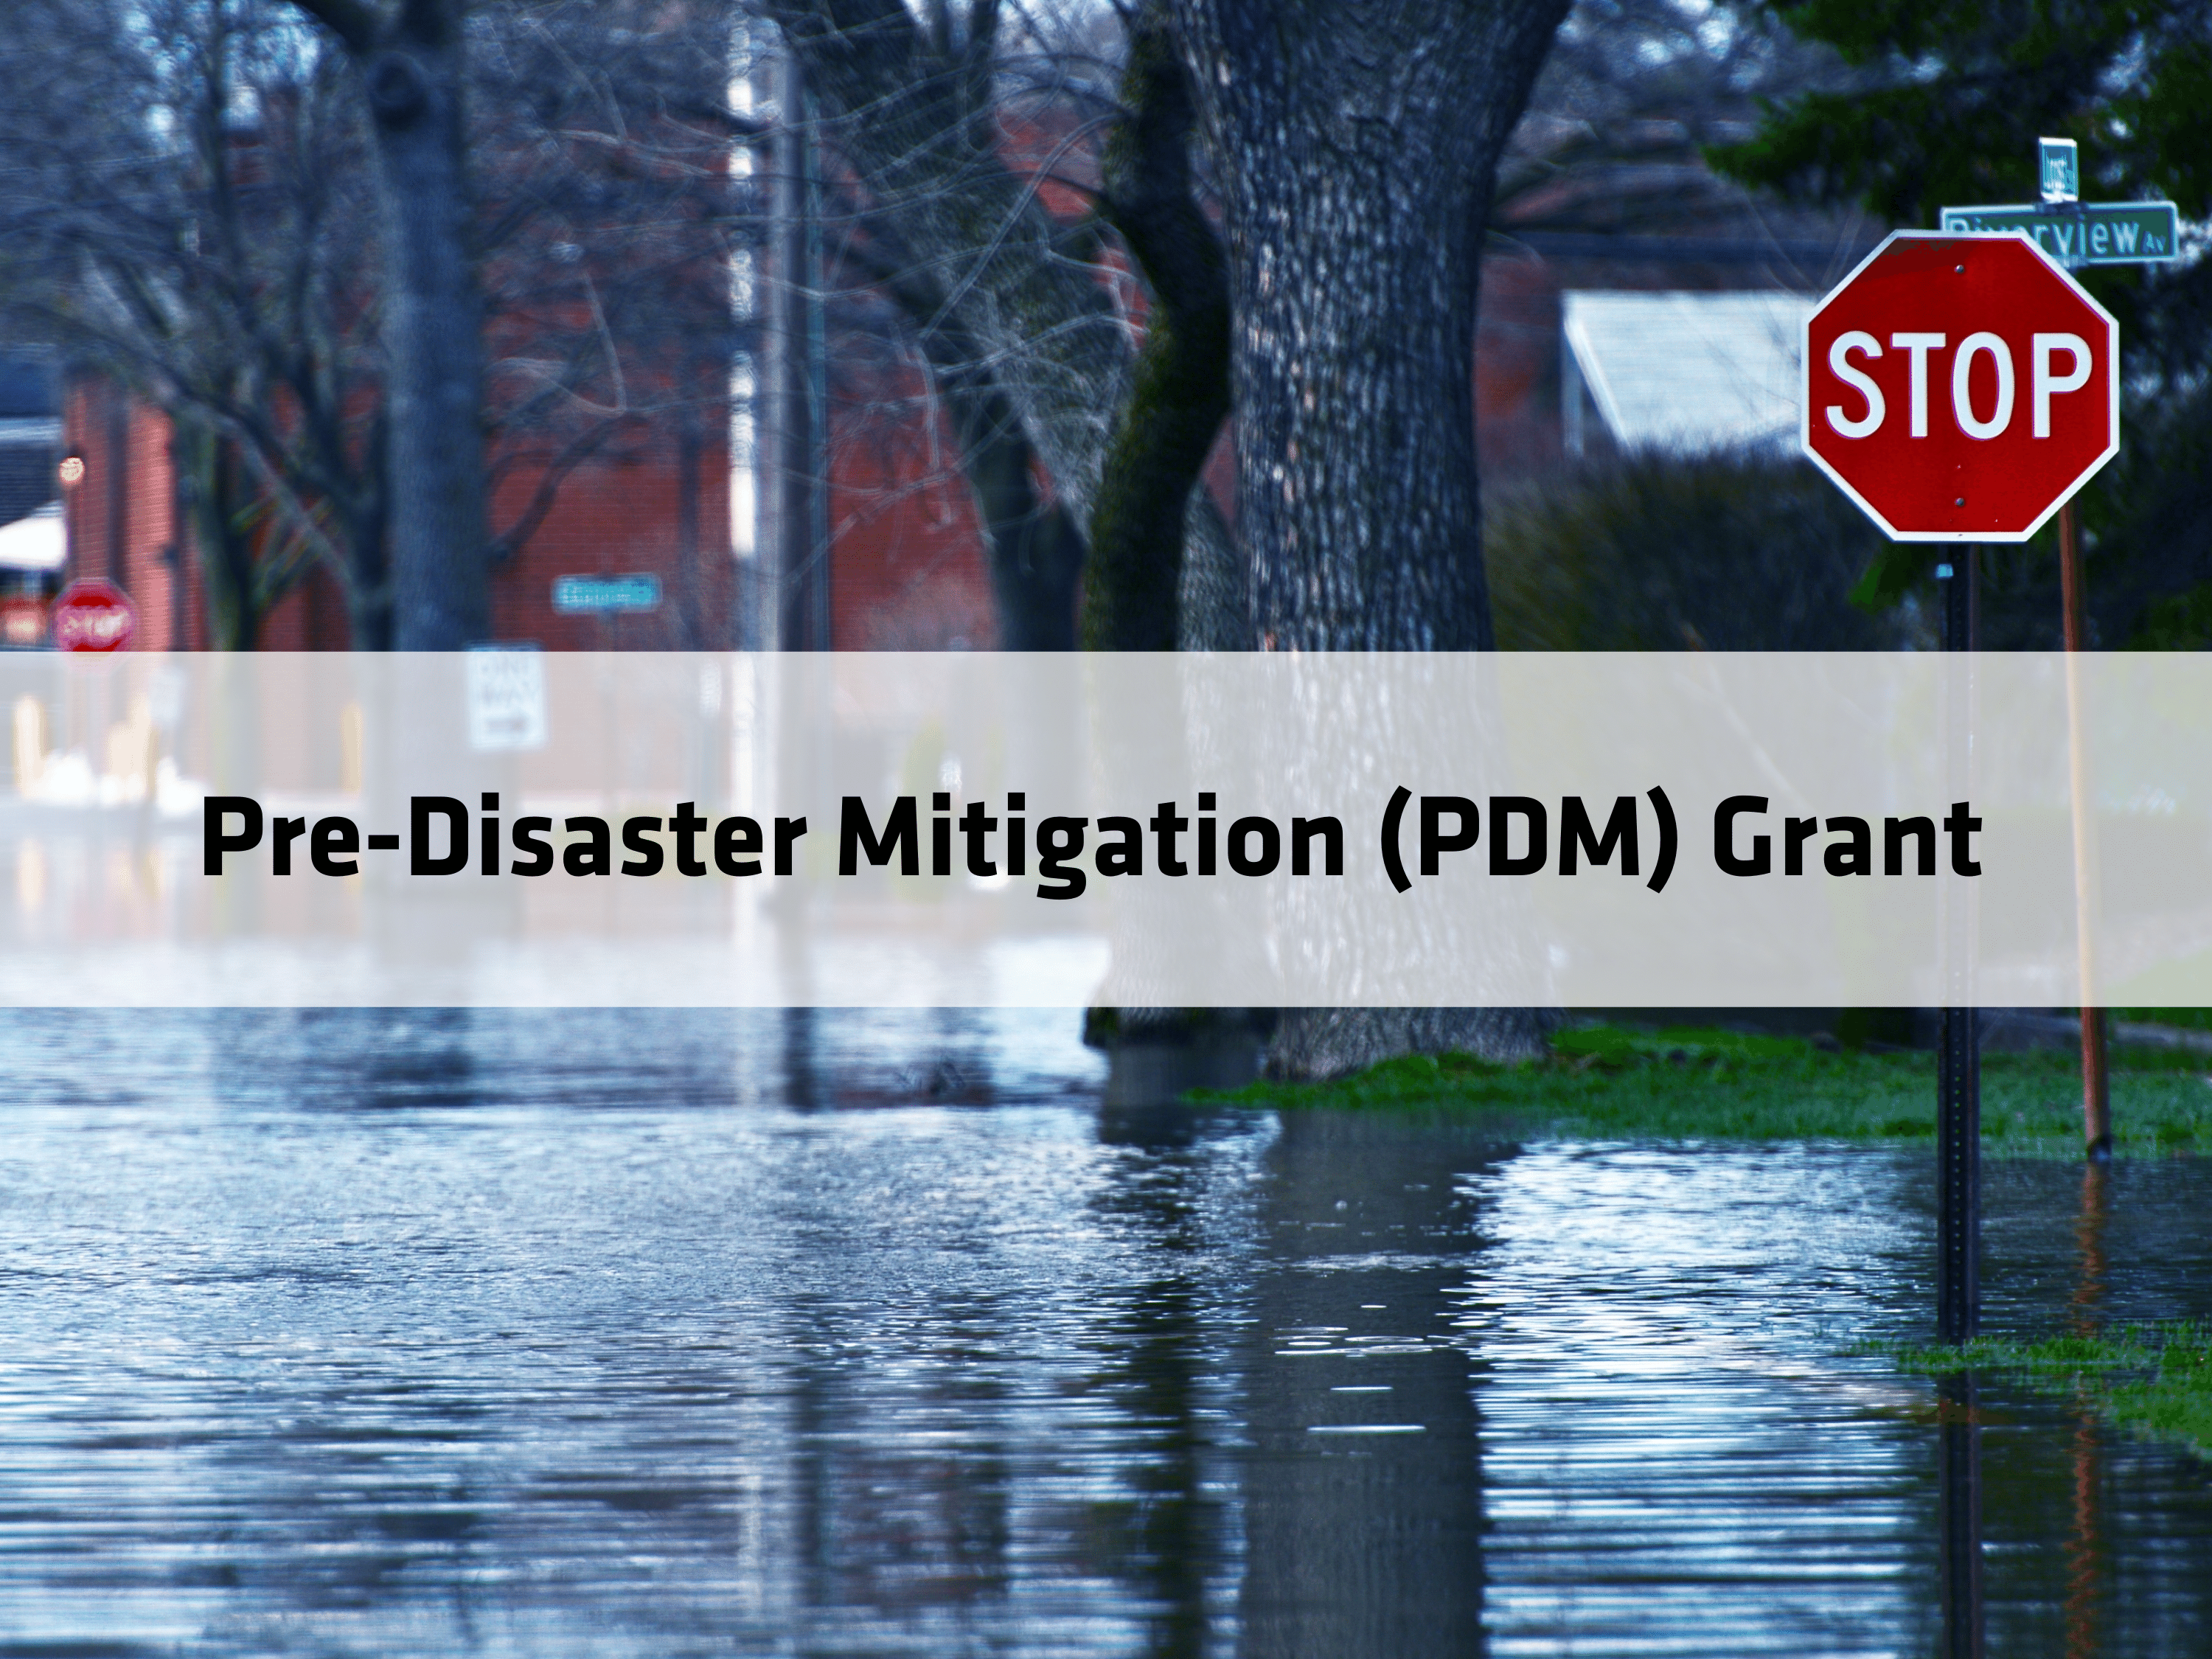 Pre-Disaster Mitigation Grant (PDM)